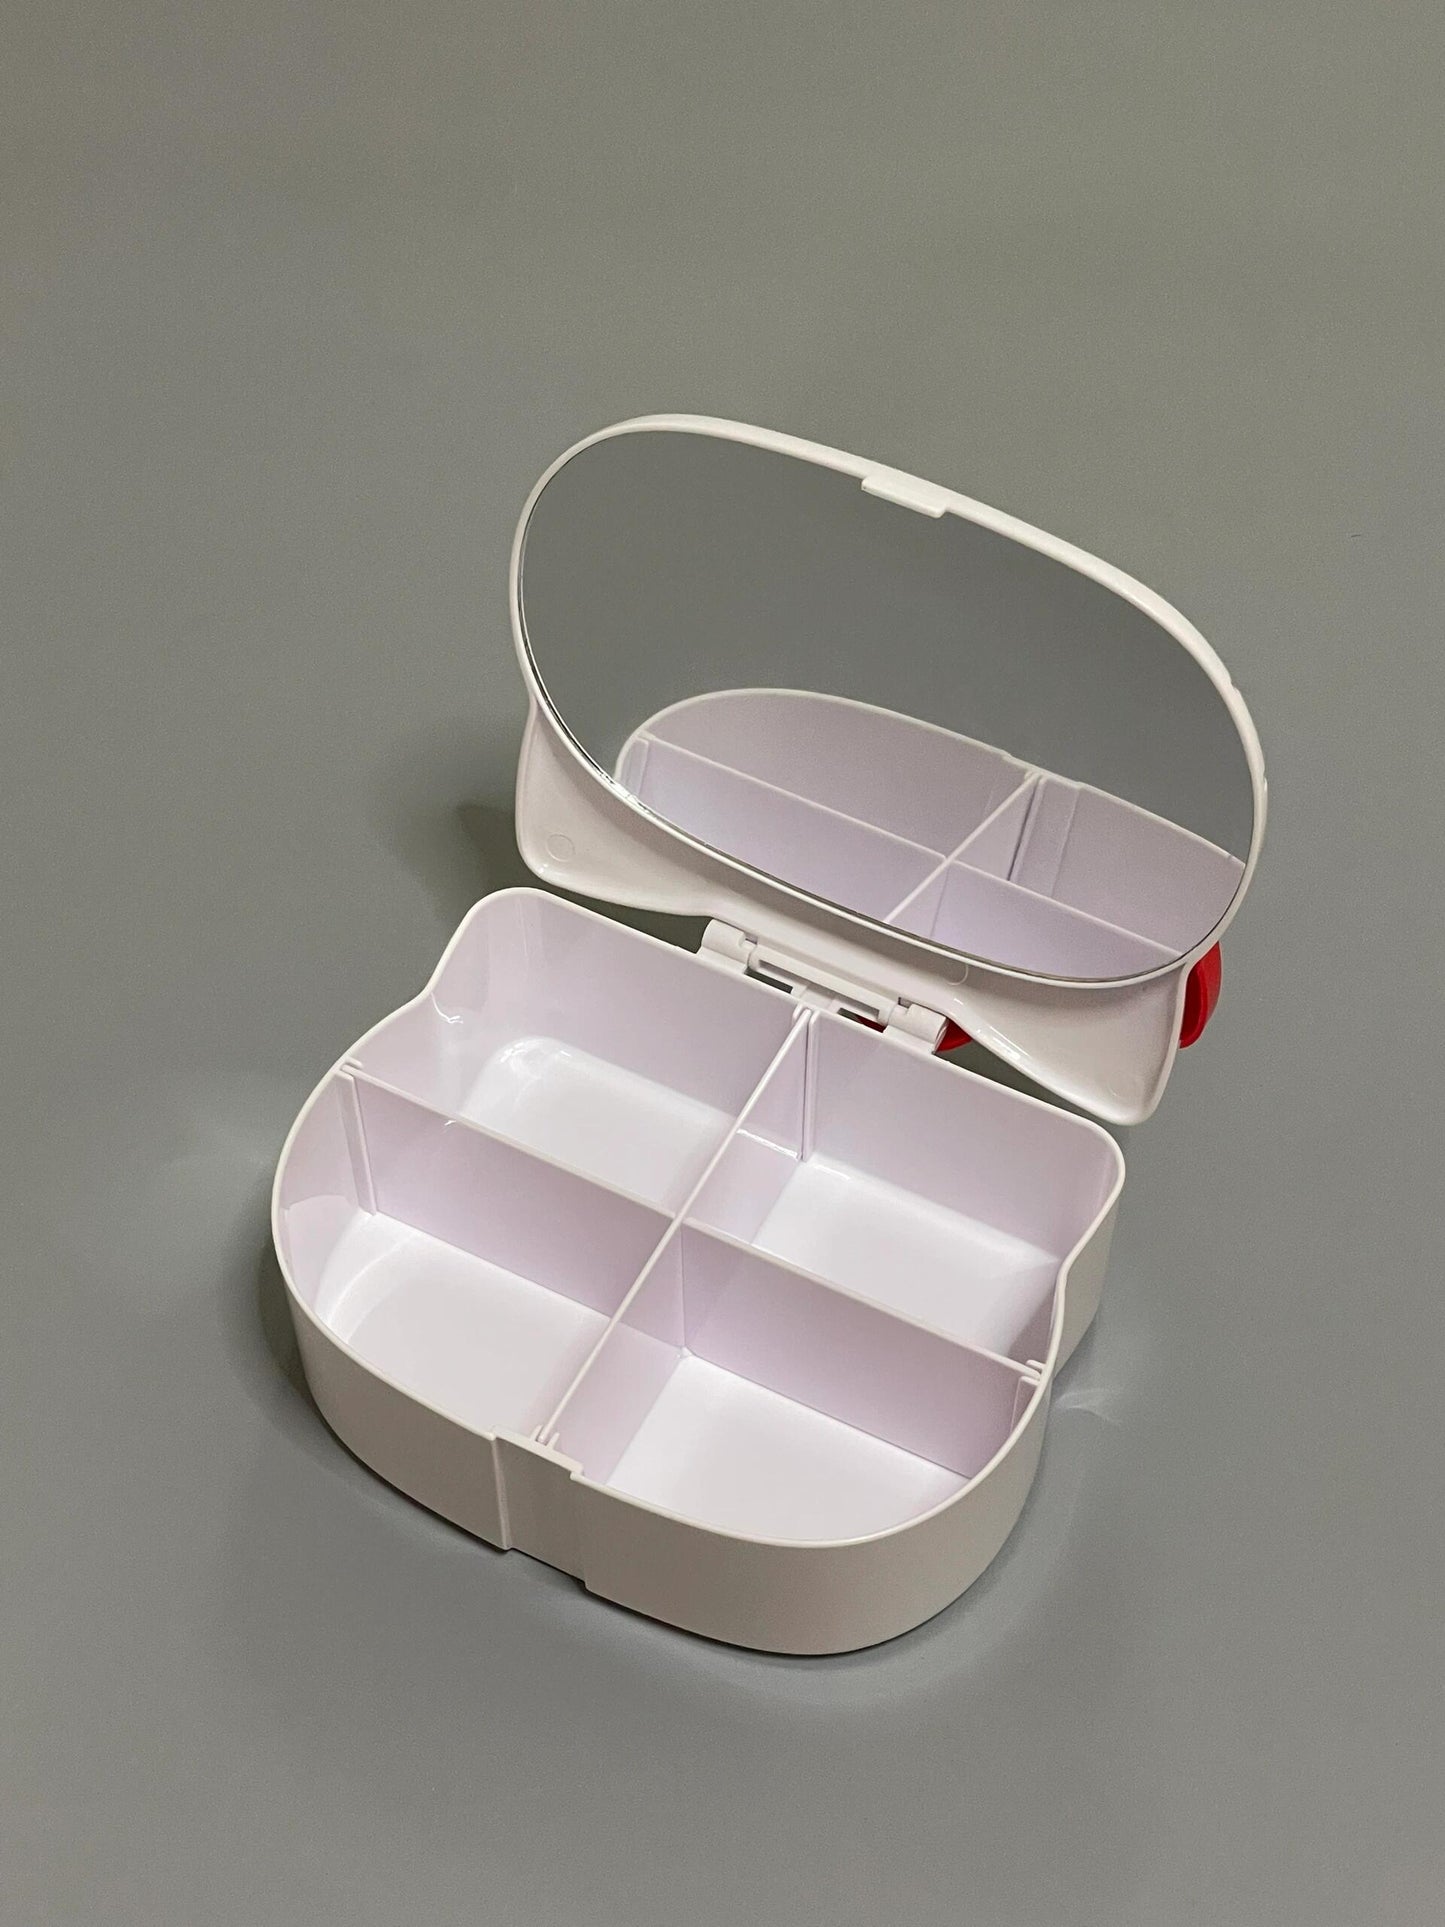 Hellokitty Desktop Mirror with Storage Vanity Table Mirror Jewelry Organizer Box